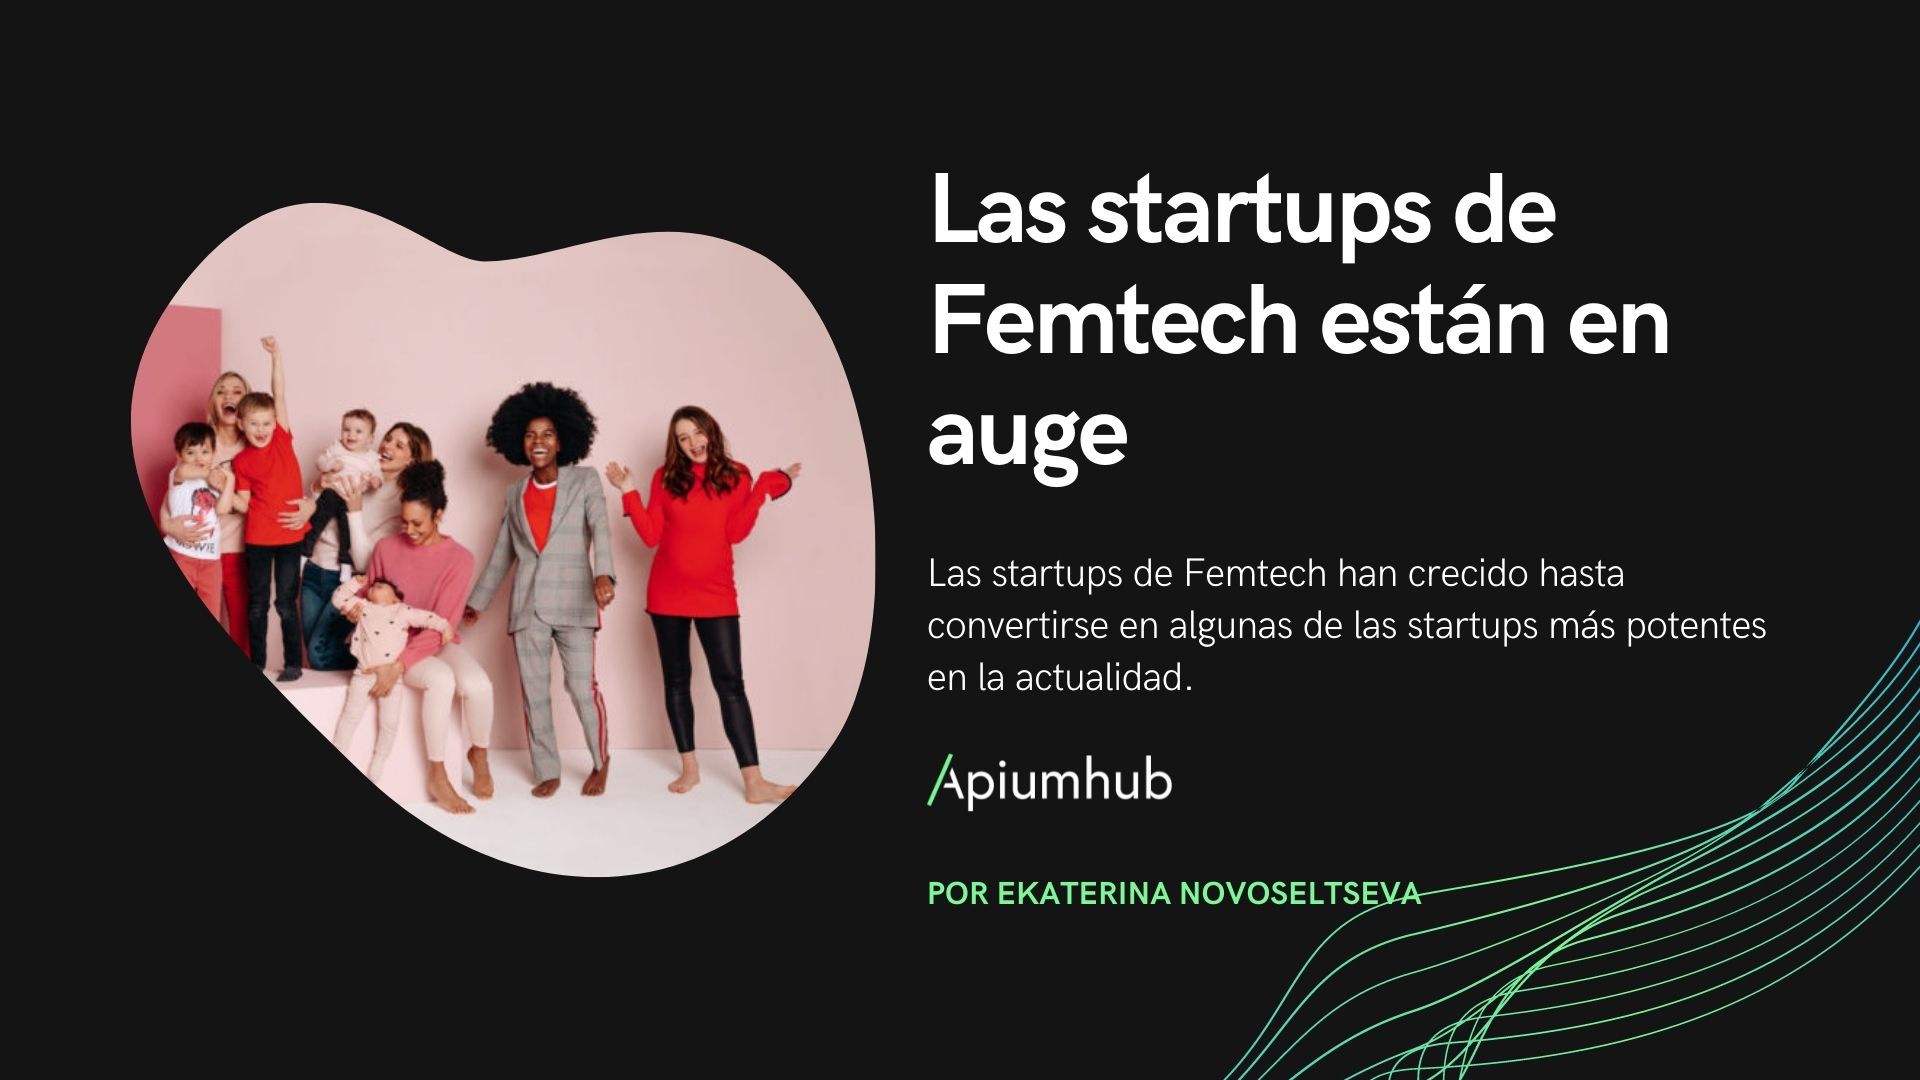 Las startups de Femtech están en auge